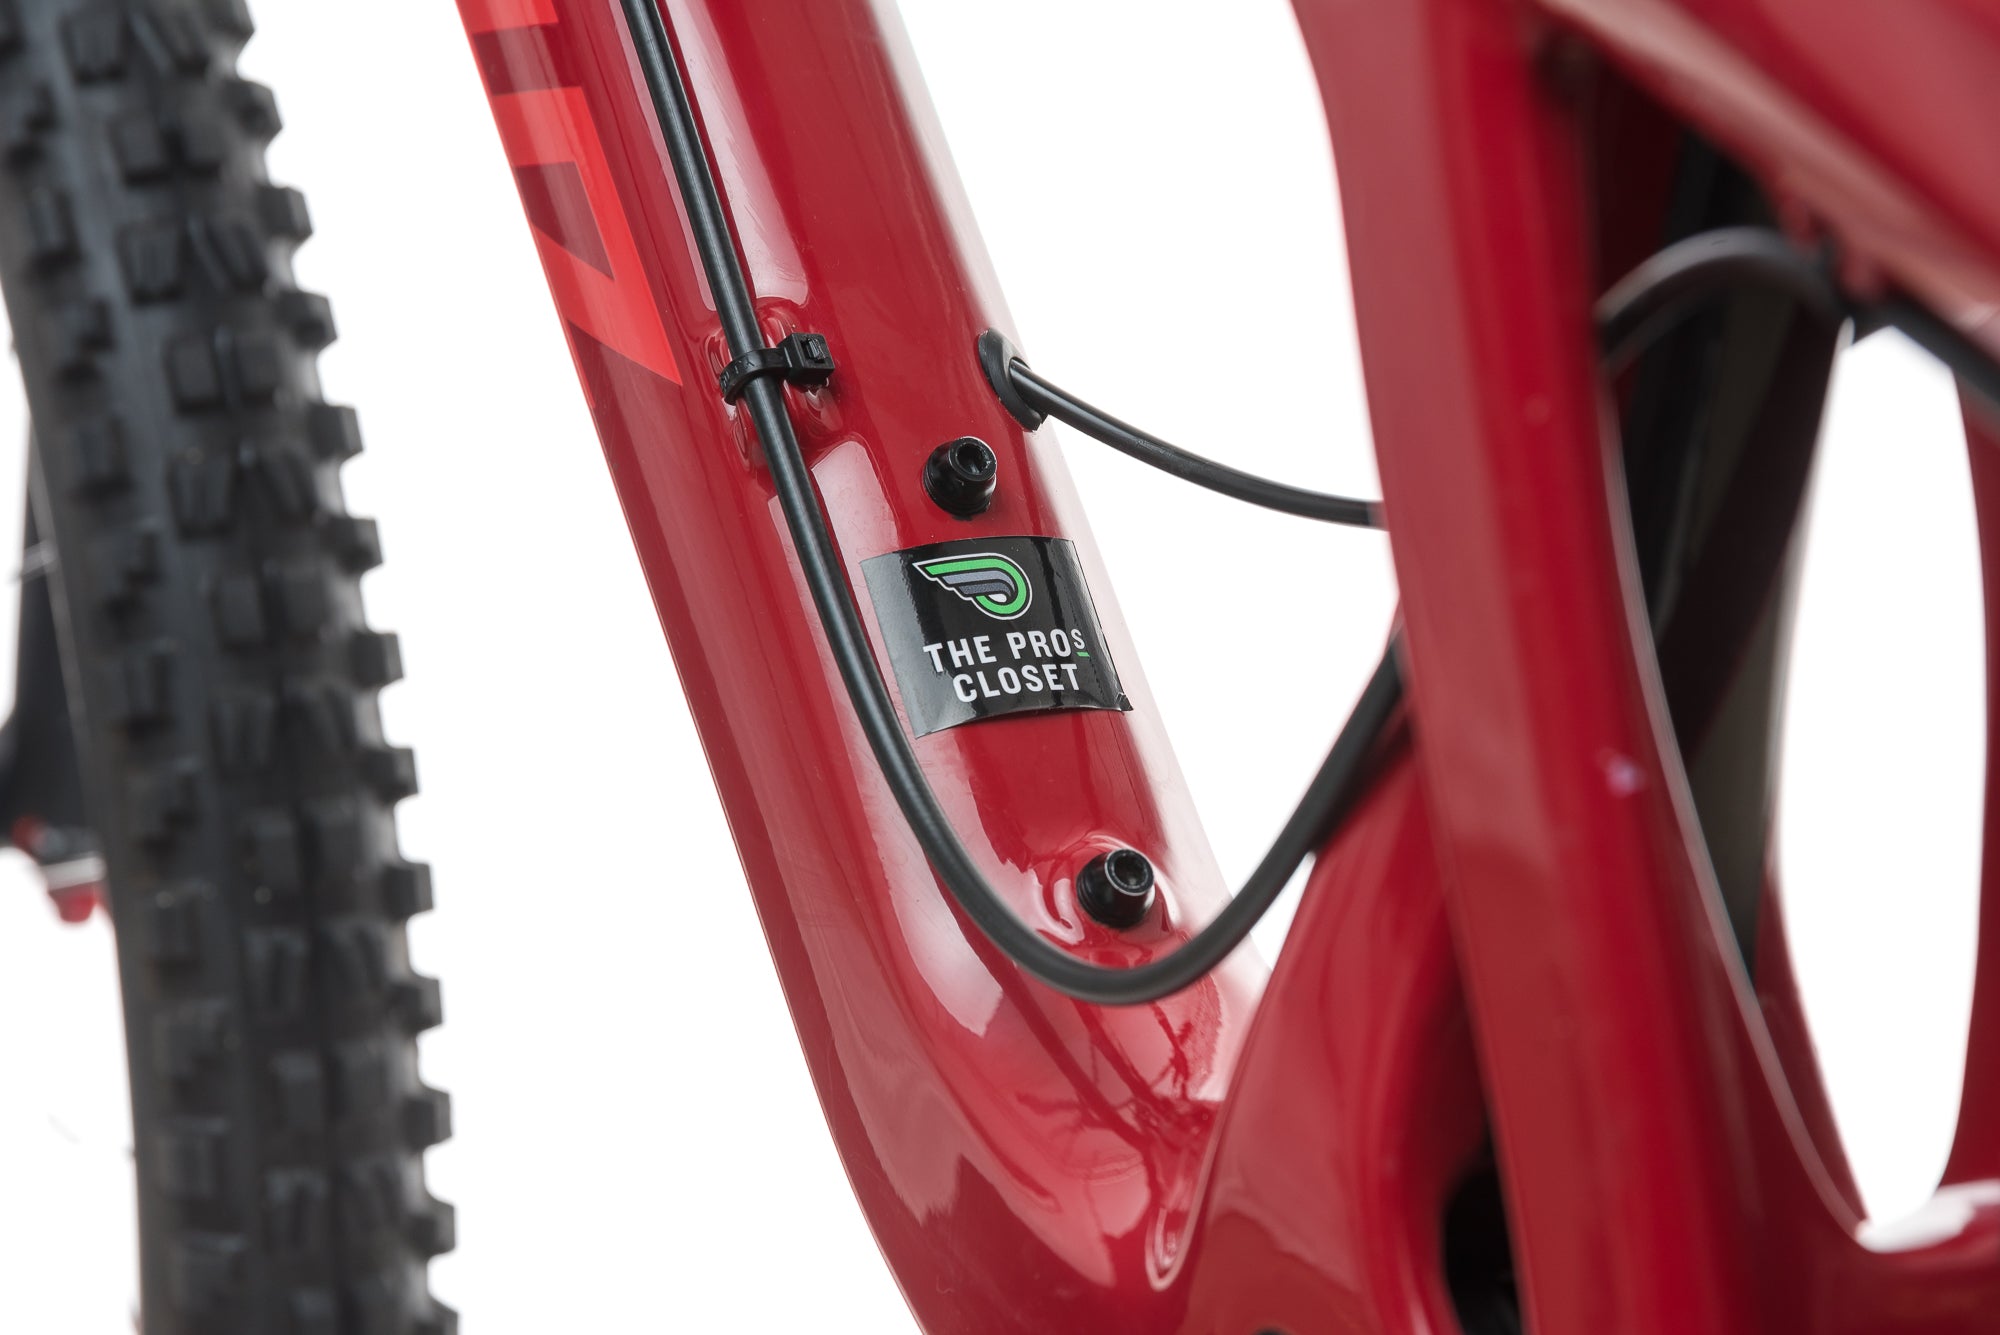 Santa Cruz Hightower 1 CC X-Large Bike - 2017 sticker